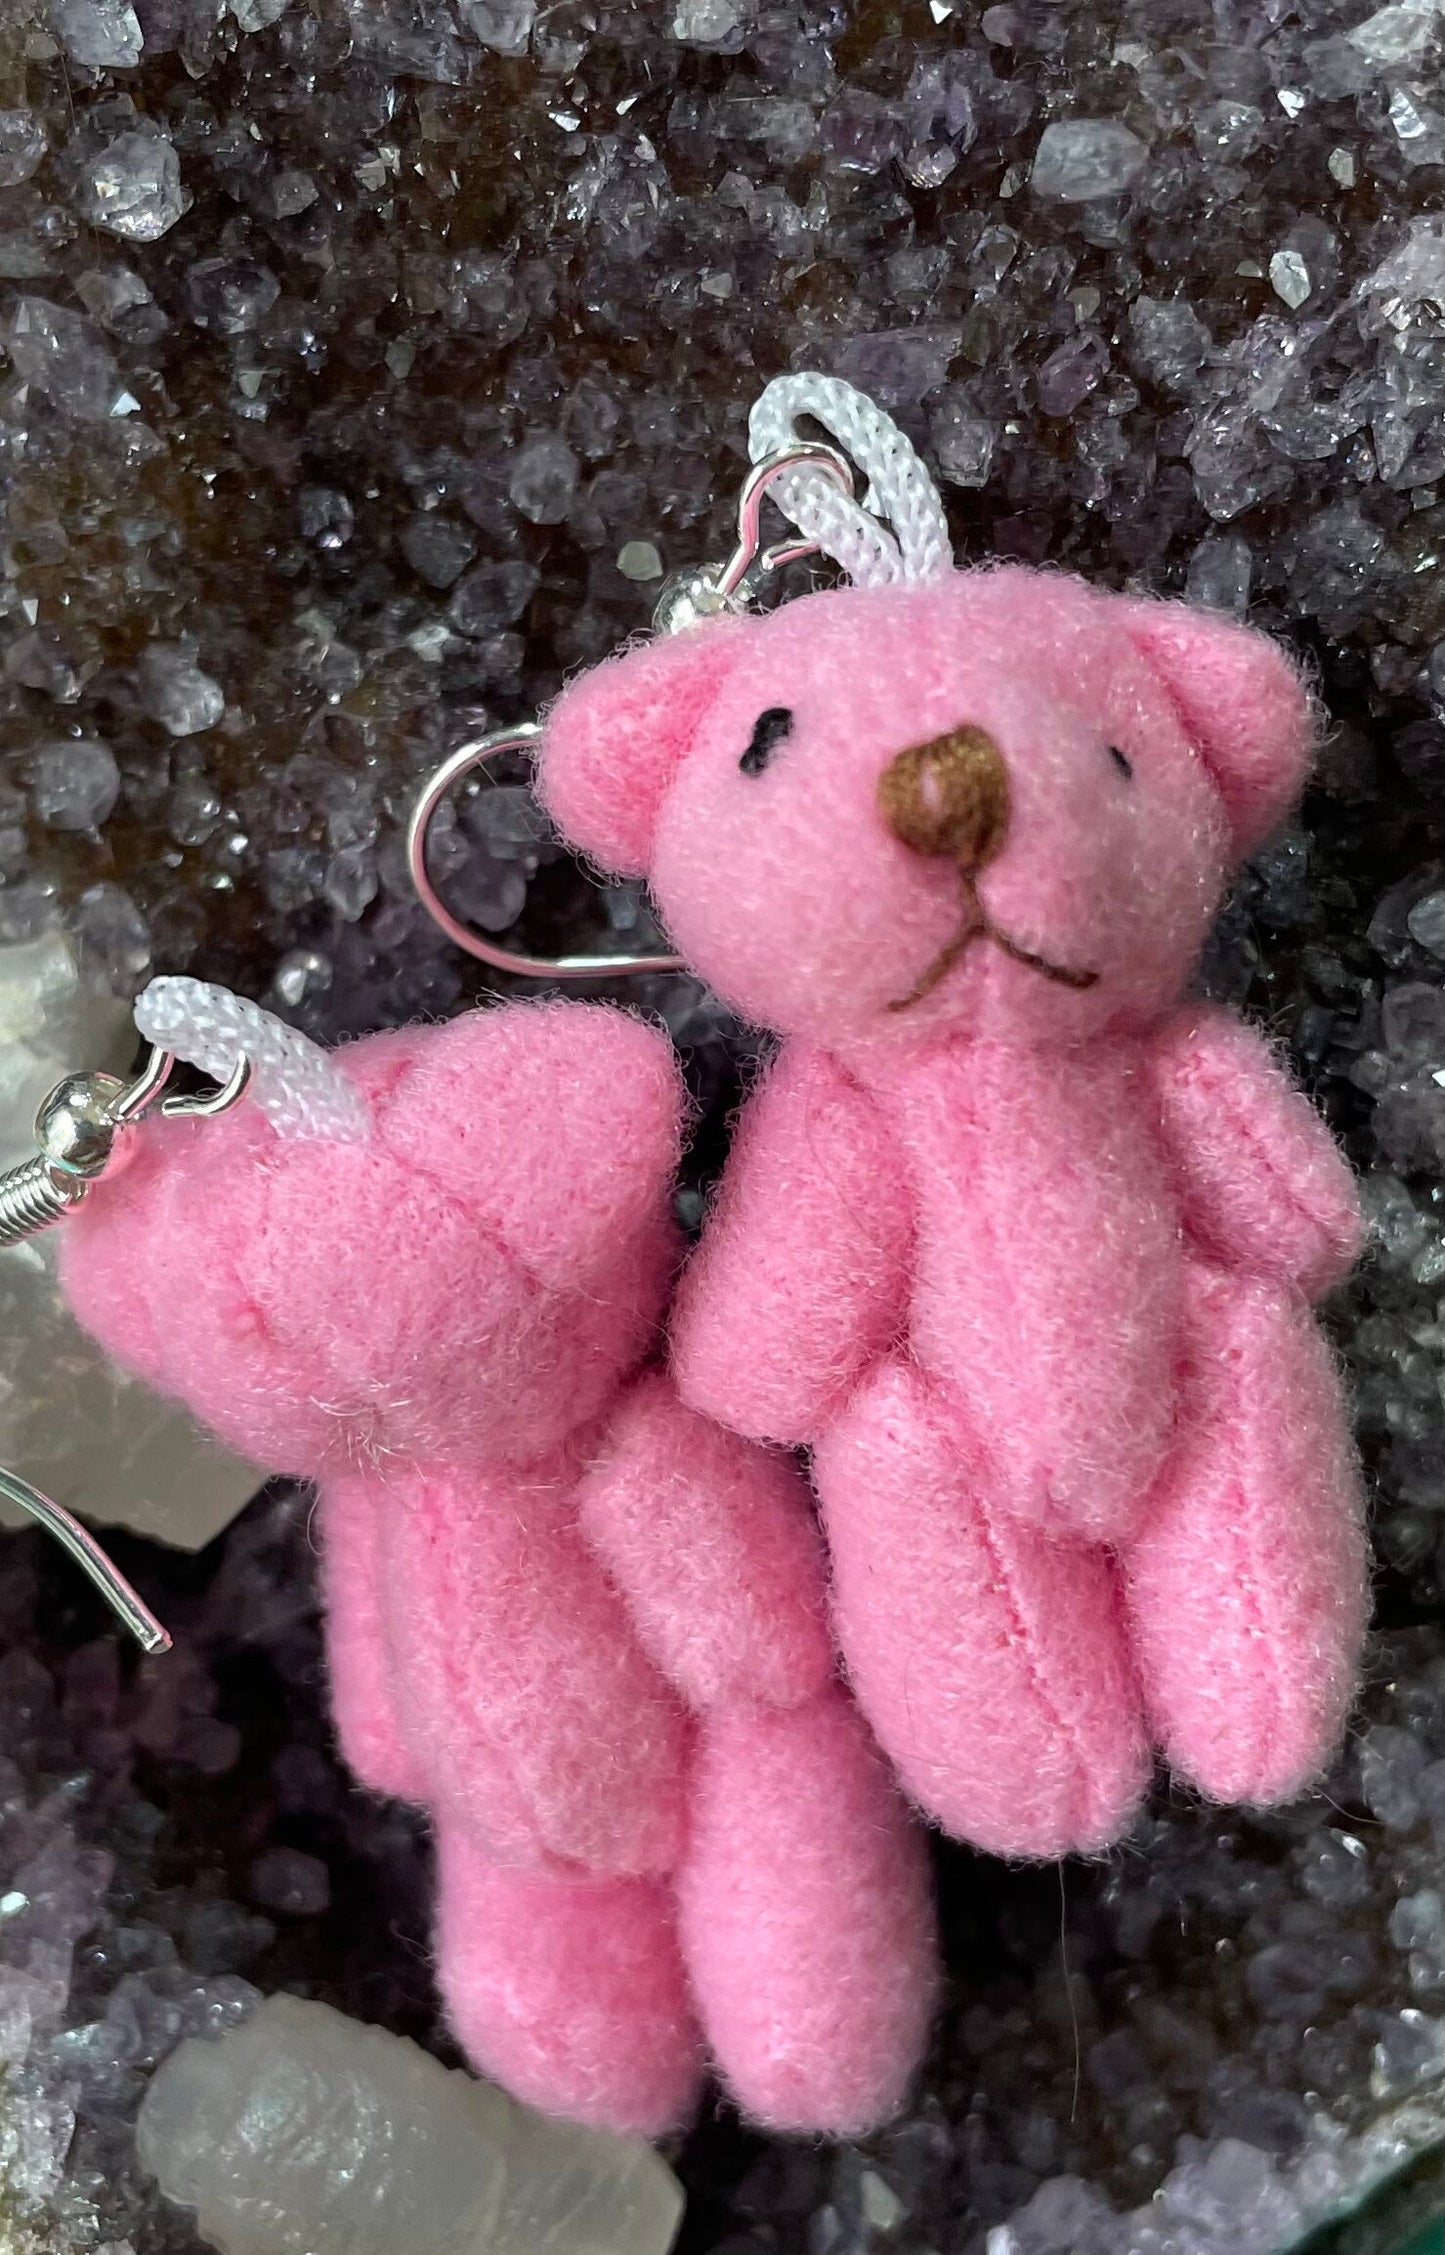 Sweet Teddy Bear earrings dangle earrings 5 colors blue, cream, lavender, tan, and pink earrings